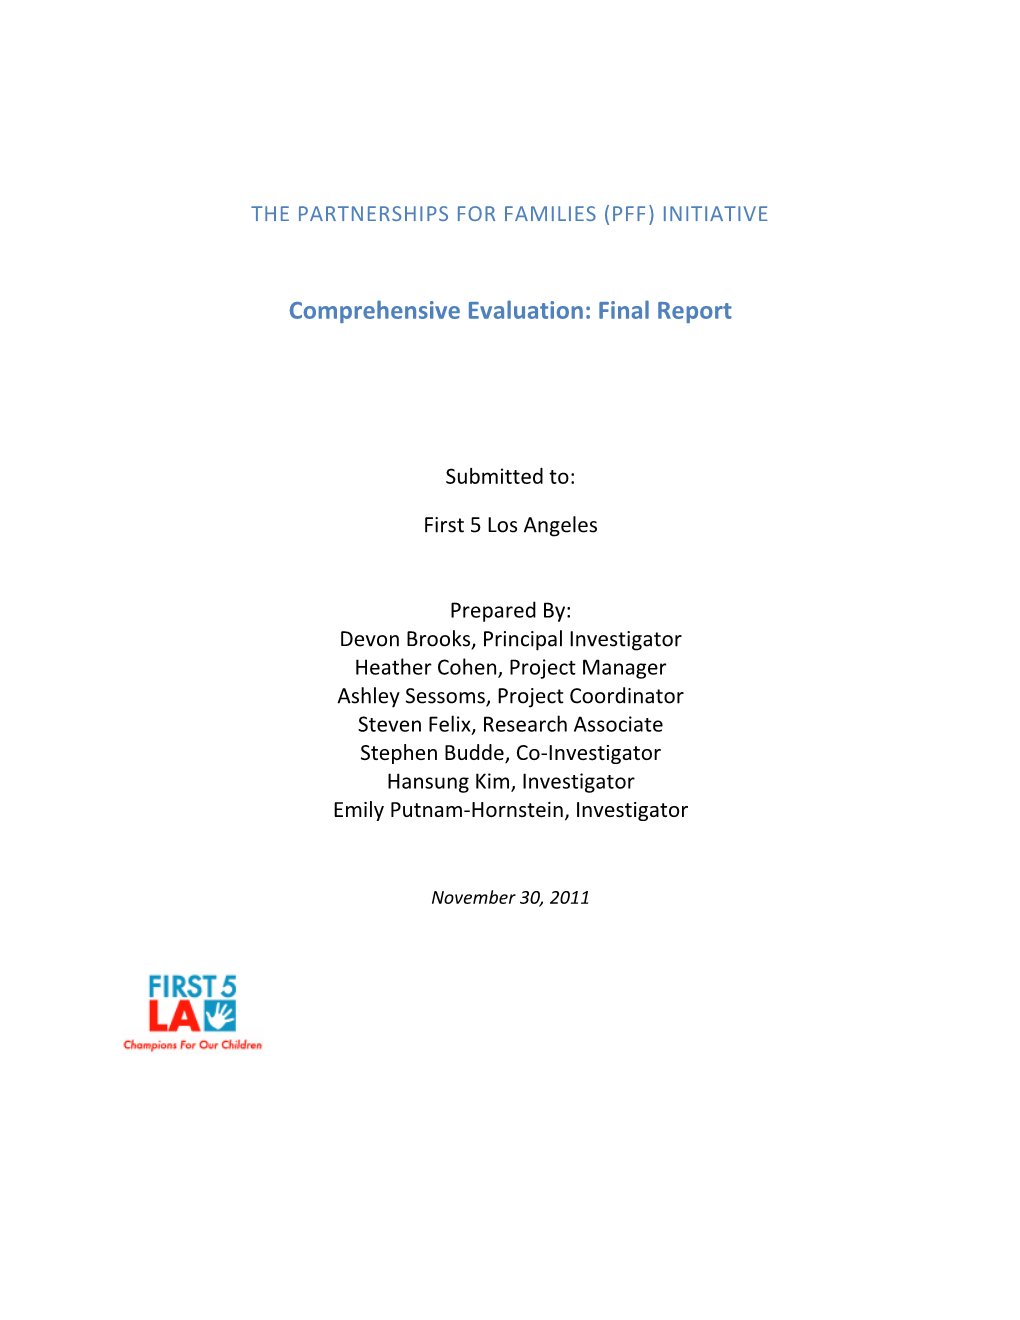 Comprehensive Evaluation: Final Report